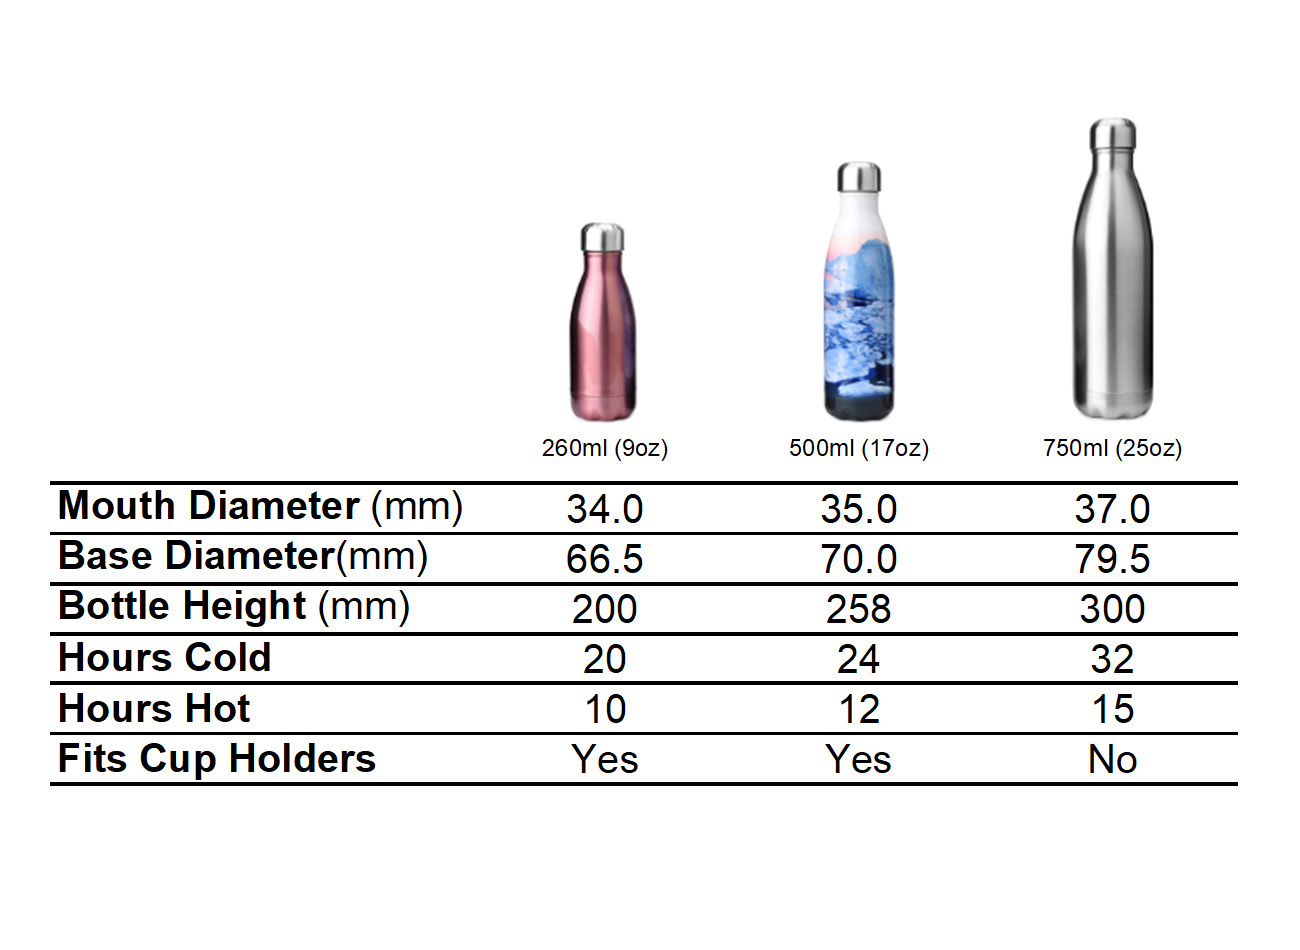 MIRA Stainless Steel Water Bottle Lid | Fits Cola Shaped Water Bottles |  Leak Proof Cap (25 oz (750 ml))